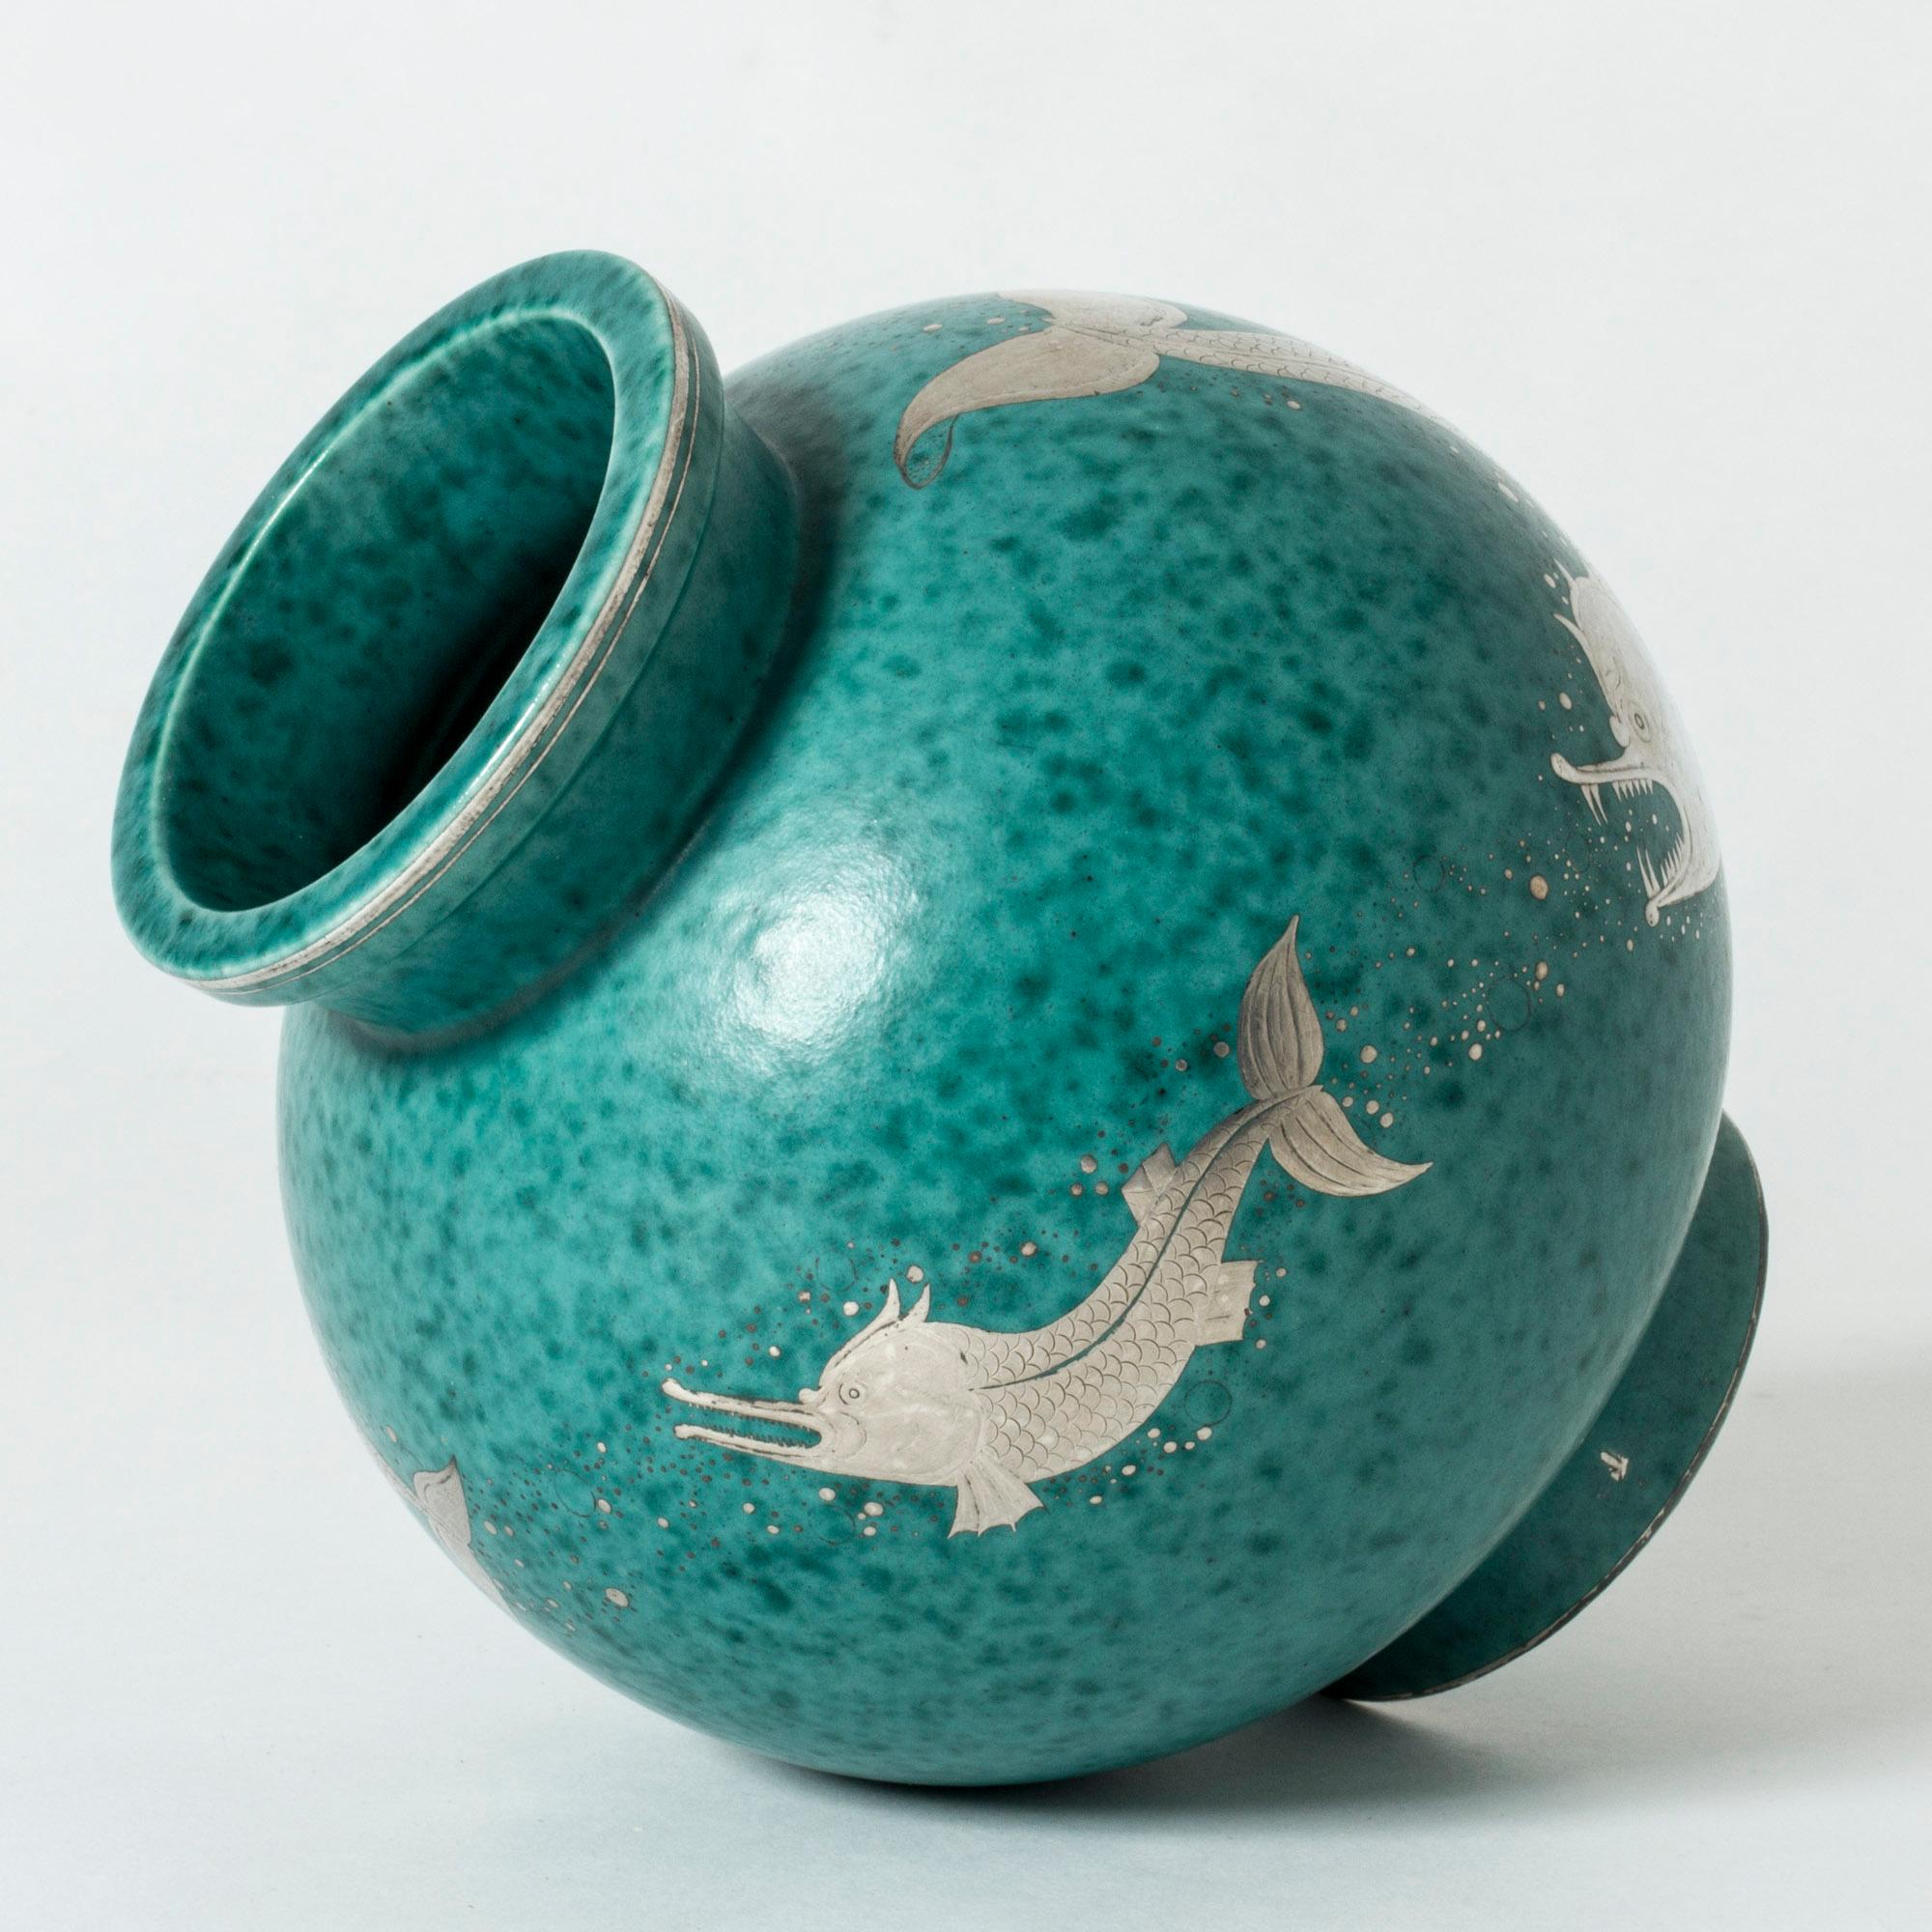 Swedish Stoneware “Argenta” Vase by Wilhelm Kåge for Gustavberg